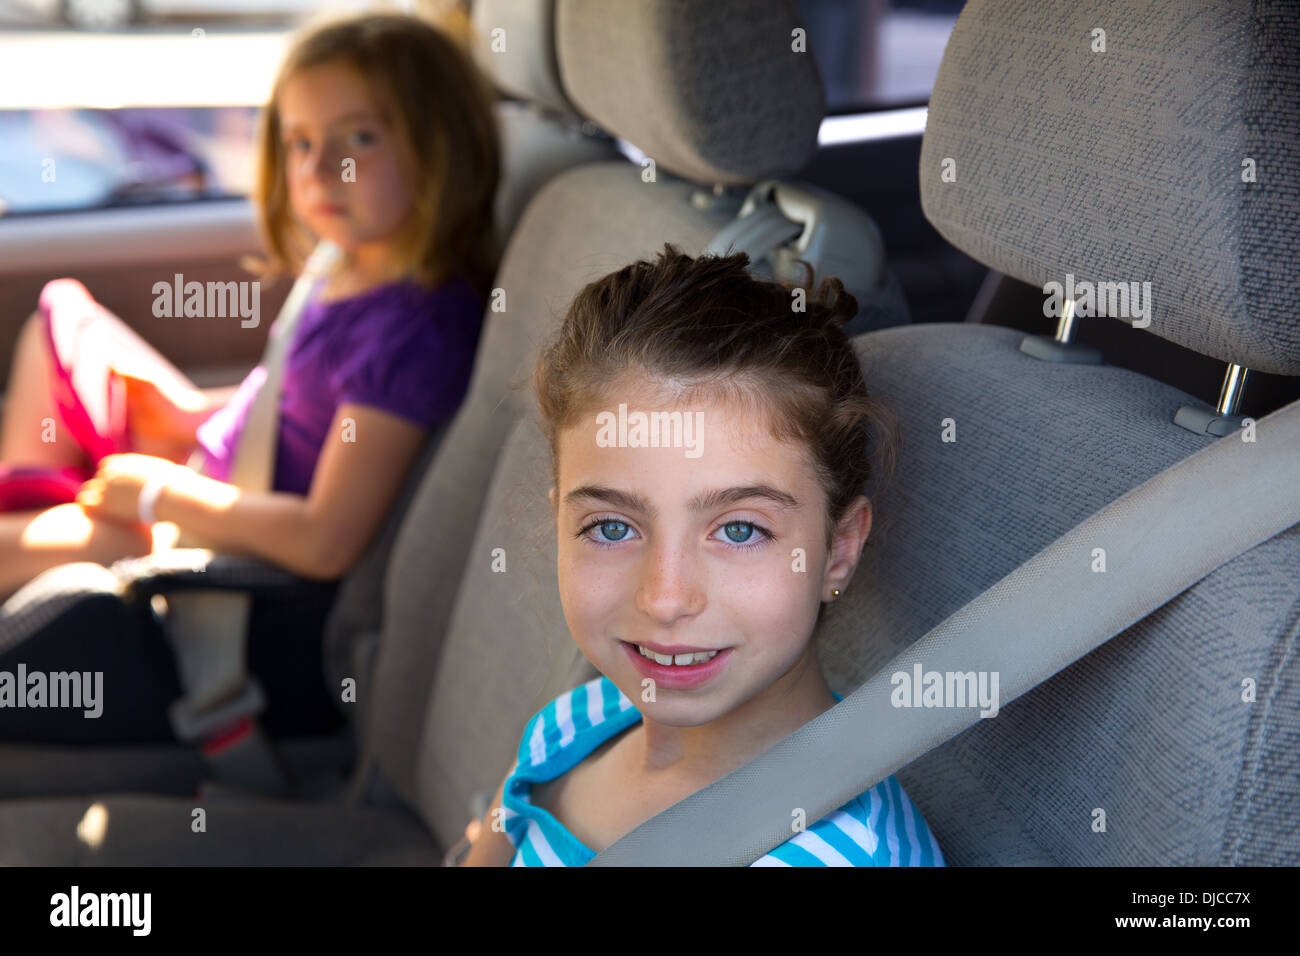 Kind Kinder Mädchen mit Sicherheitsgurt im Auto Fahrzeug innen- Stockfoto